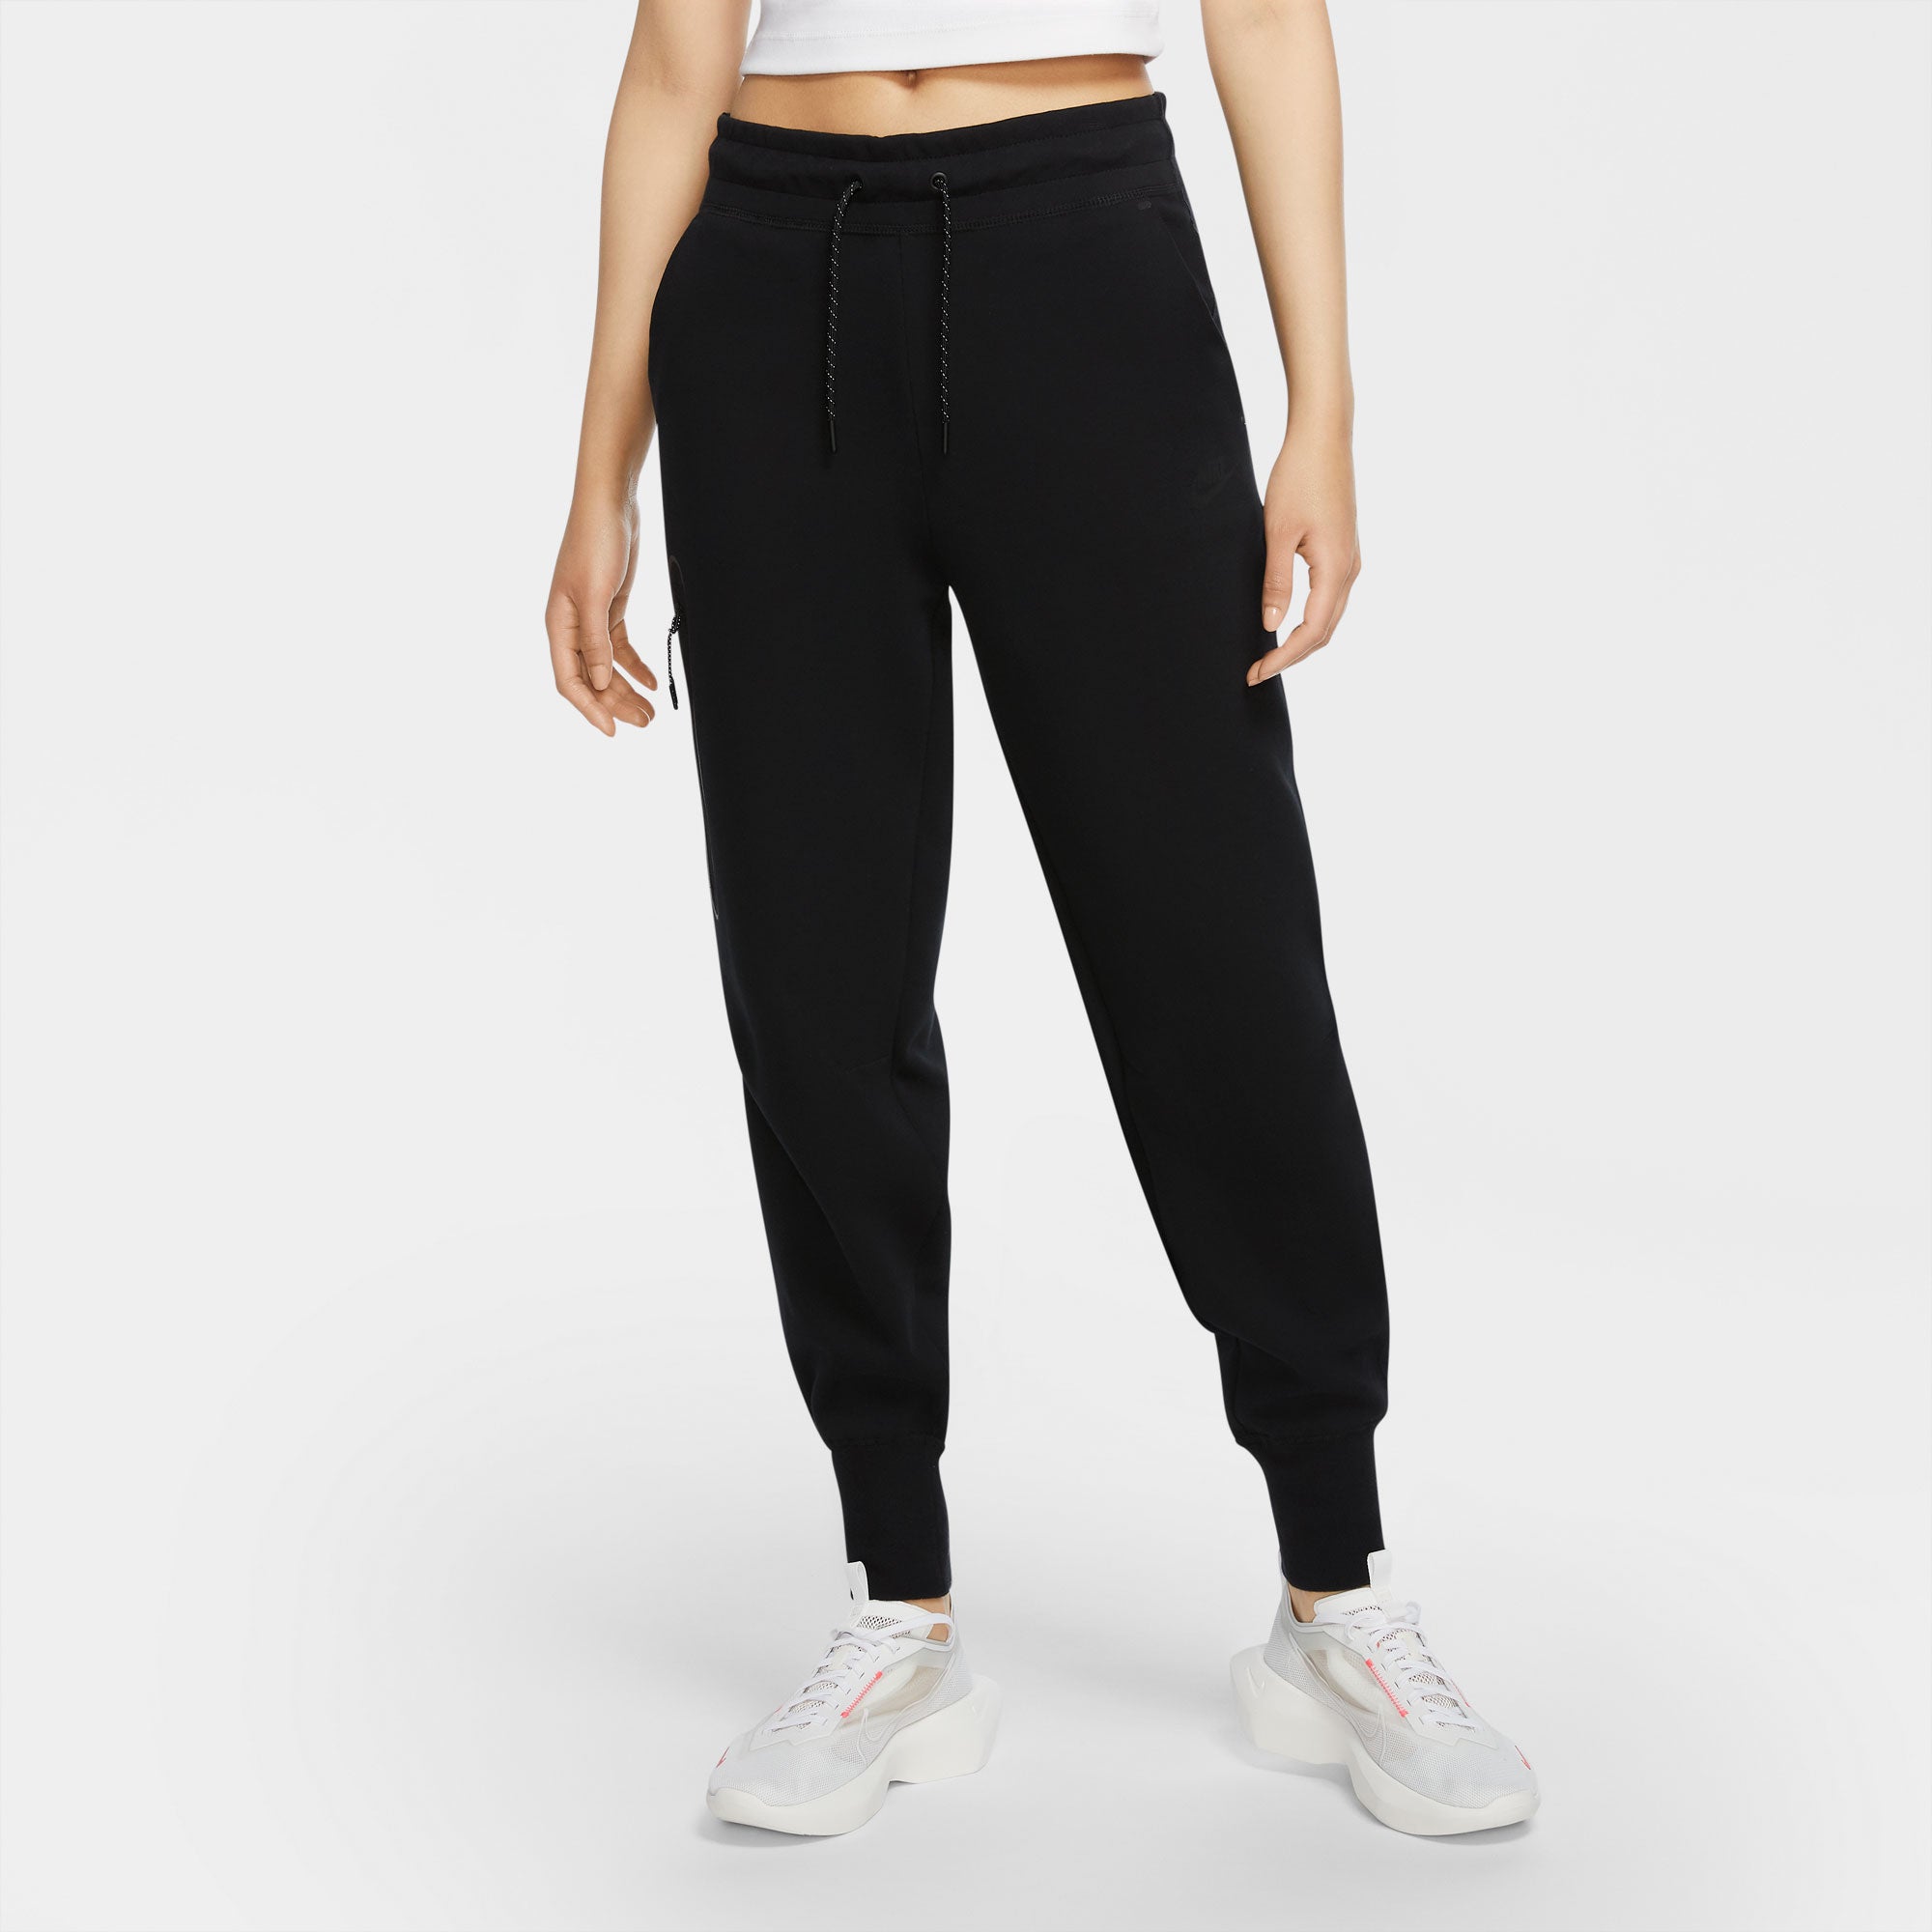 Nike Tech Fleece Women's Pants Black (1)